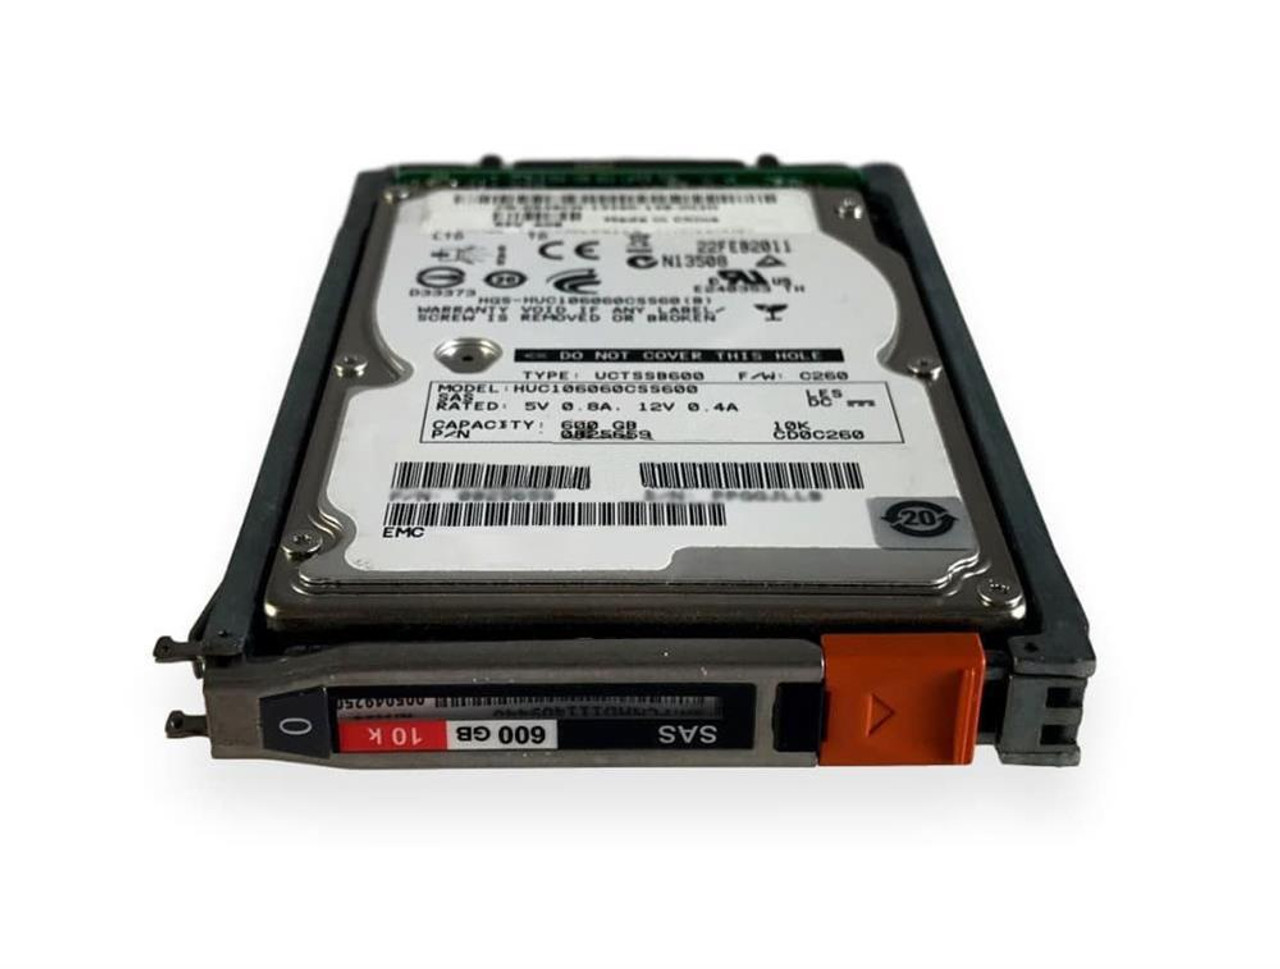 T3-2S10-600TU EMC 600GB 10000RPM SAS 12Gbps 2.5-inch Internal Hard Drive for Unity 25 x 2.5 Enclosure